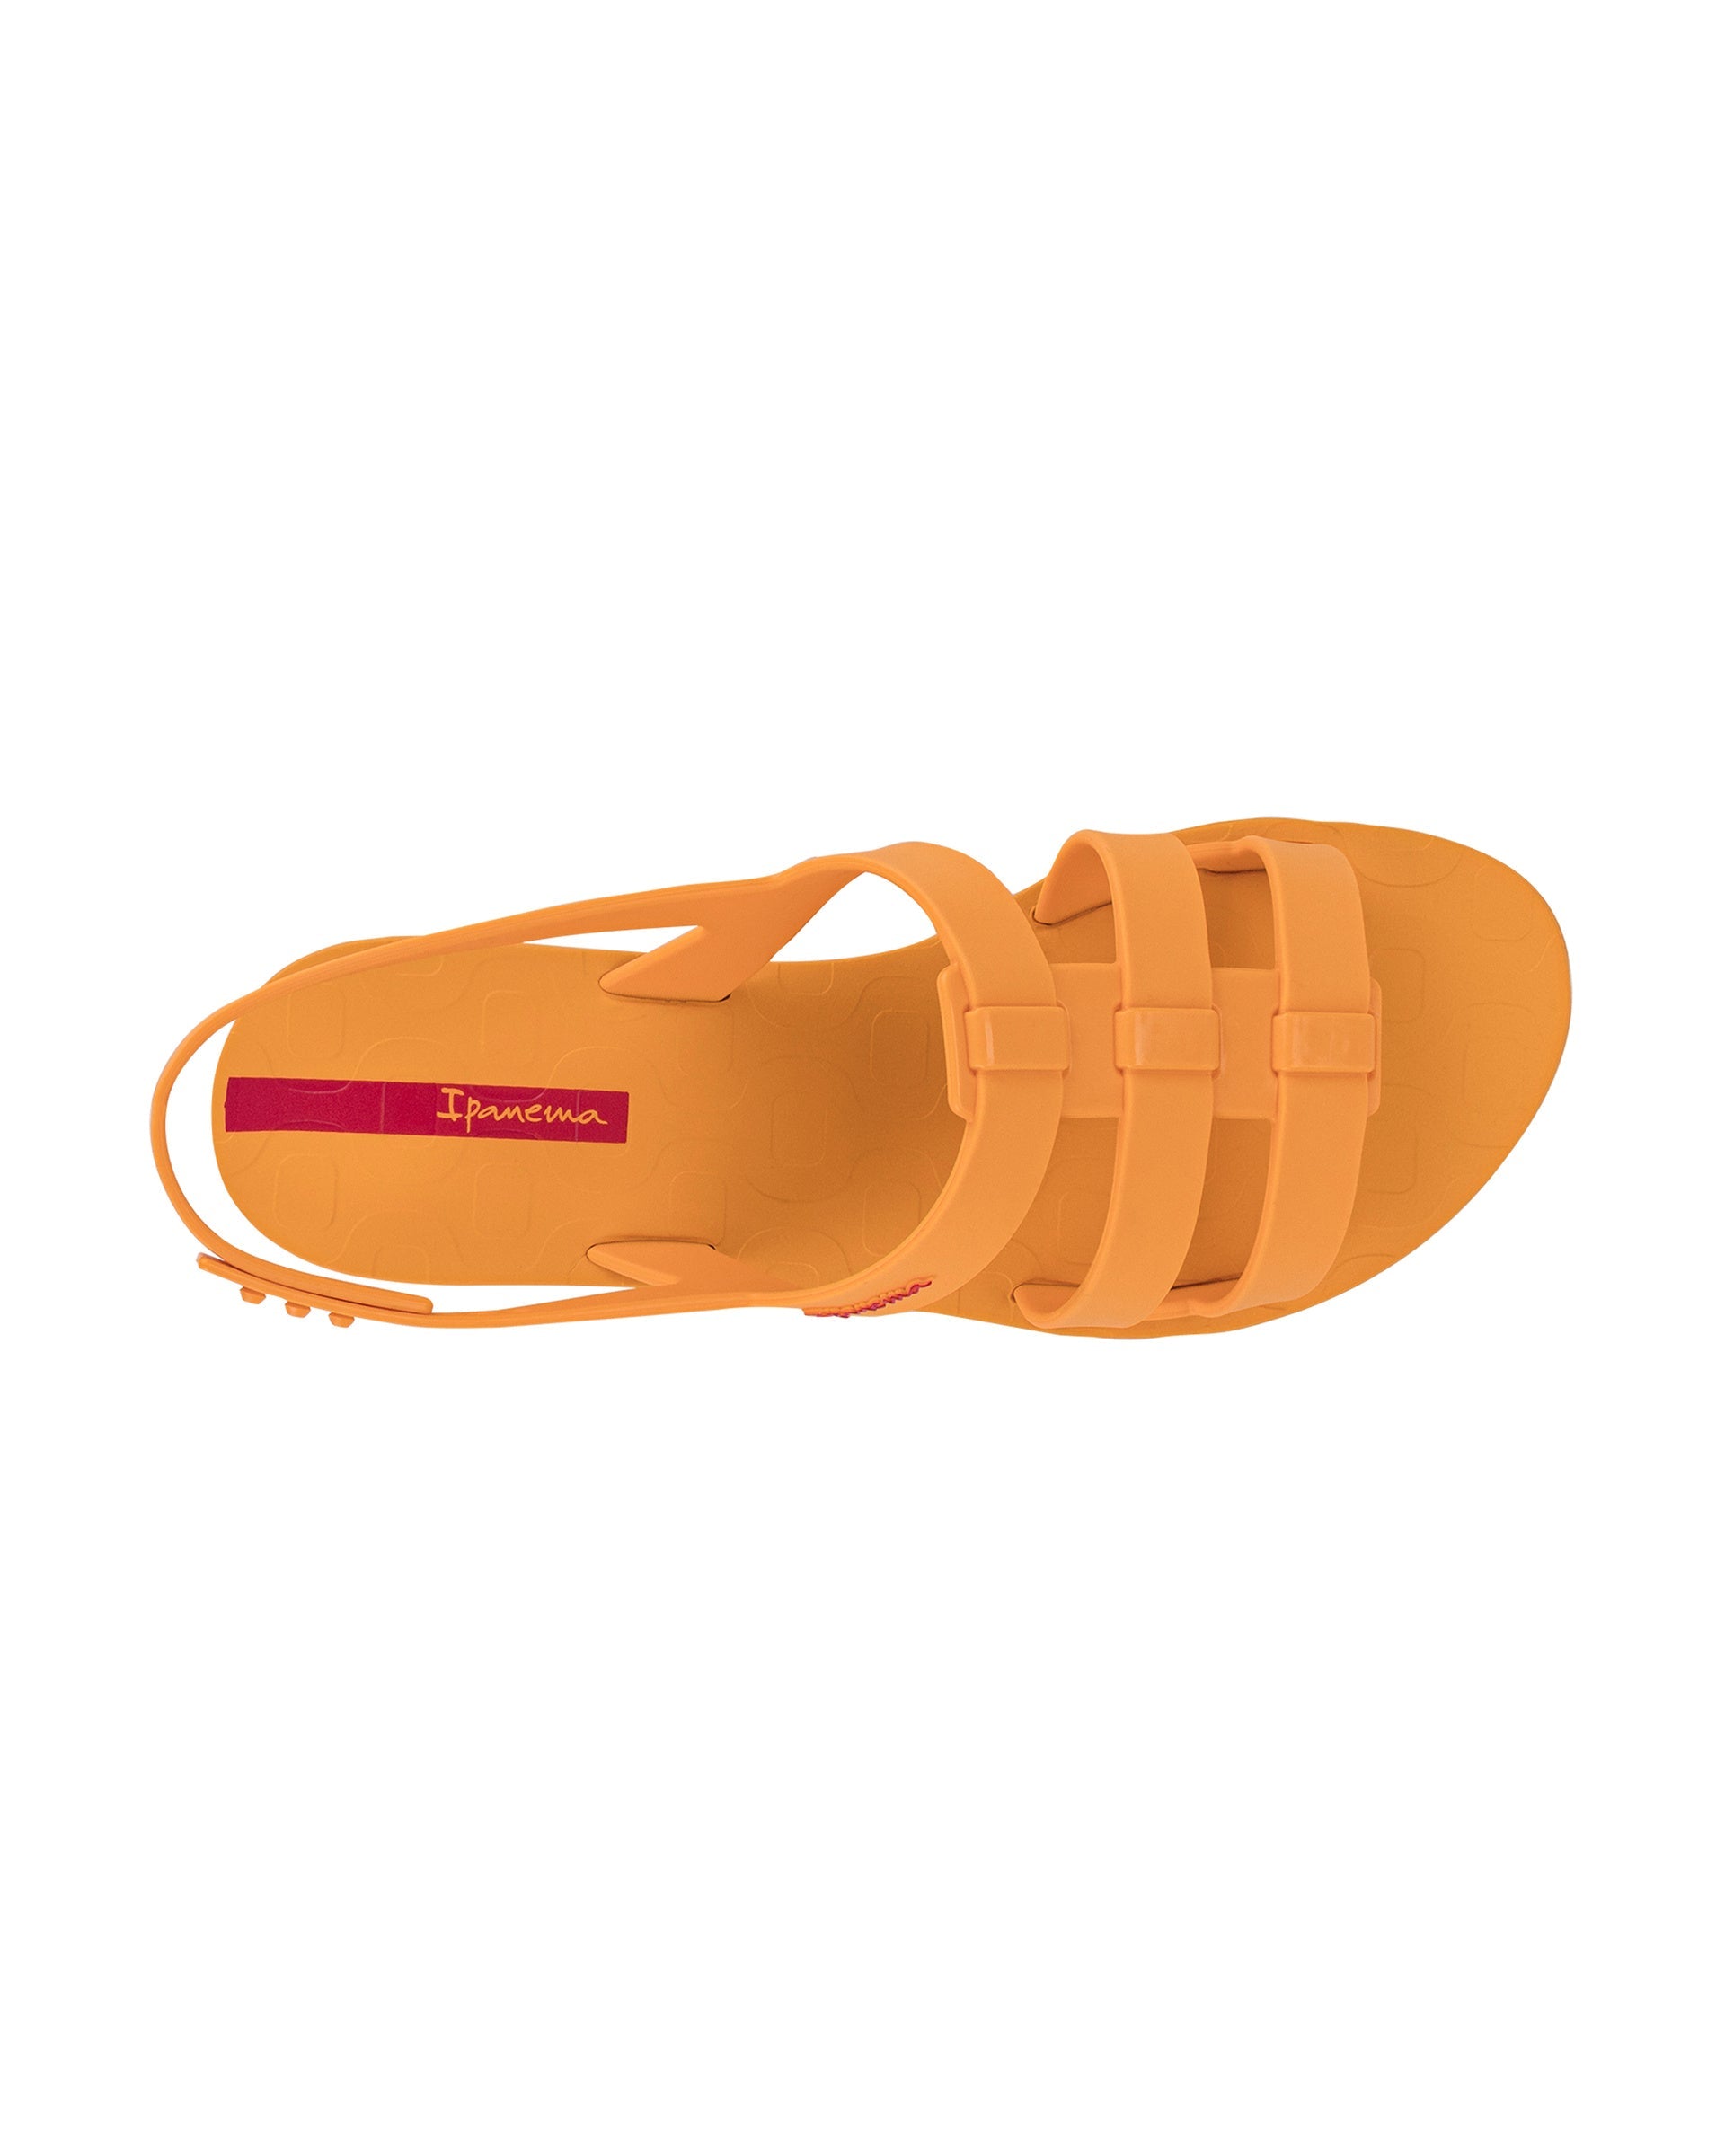 Top view of a orange Ipanema Style women's sandal.